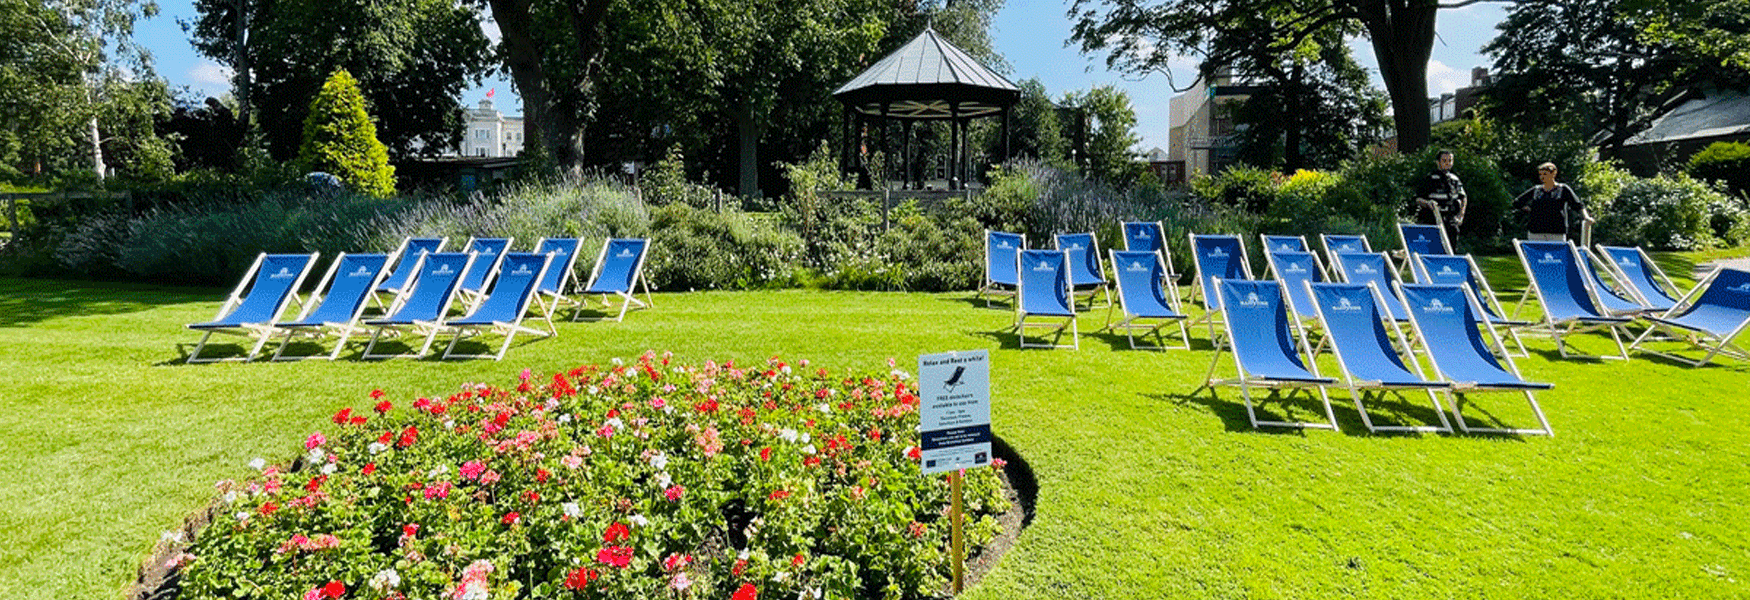 Deckchairs in Brenchley Gardens